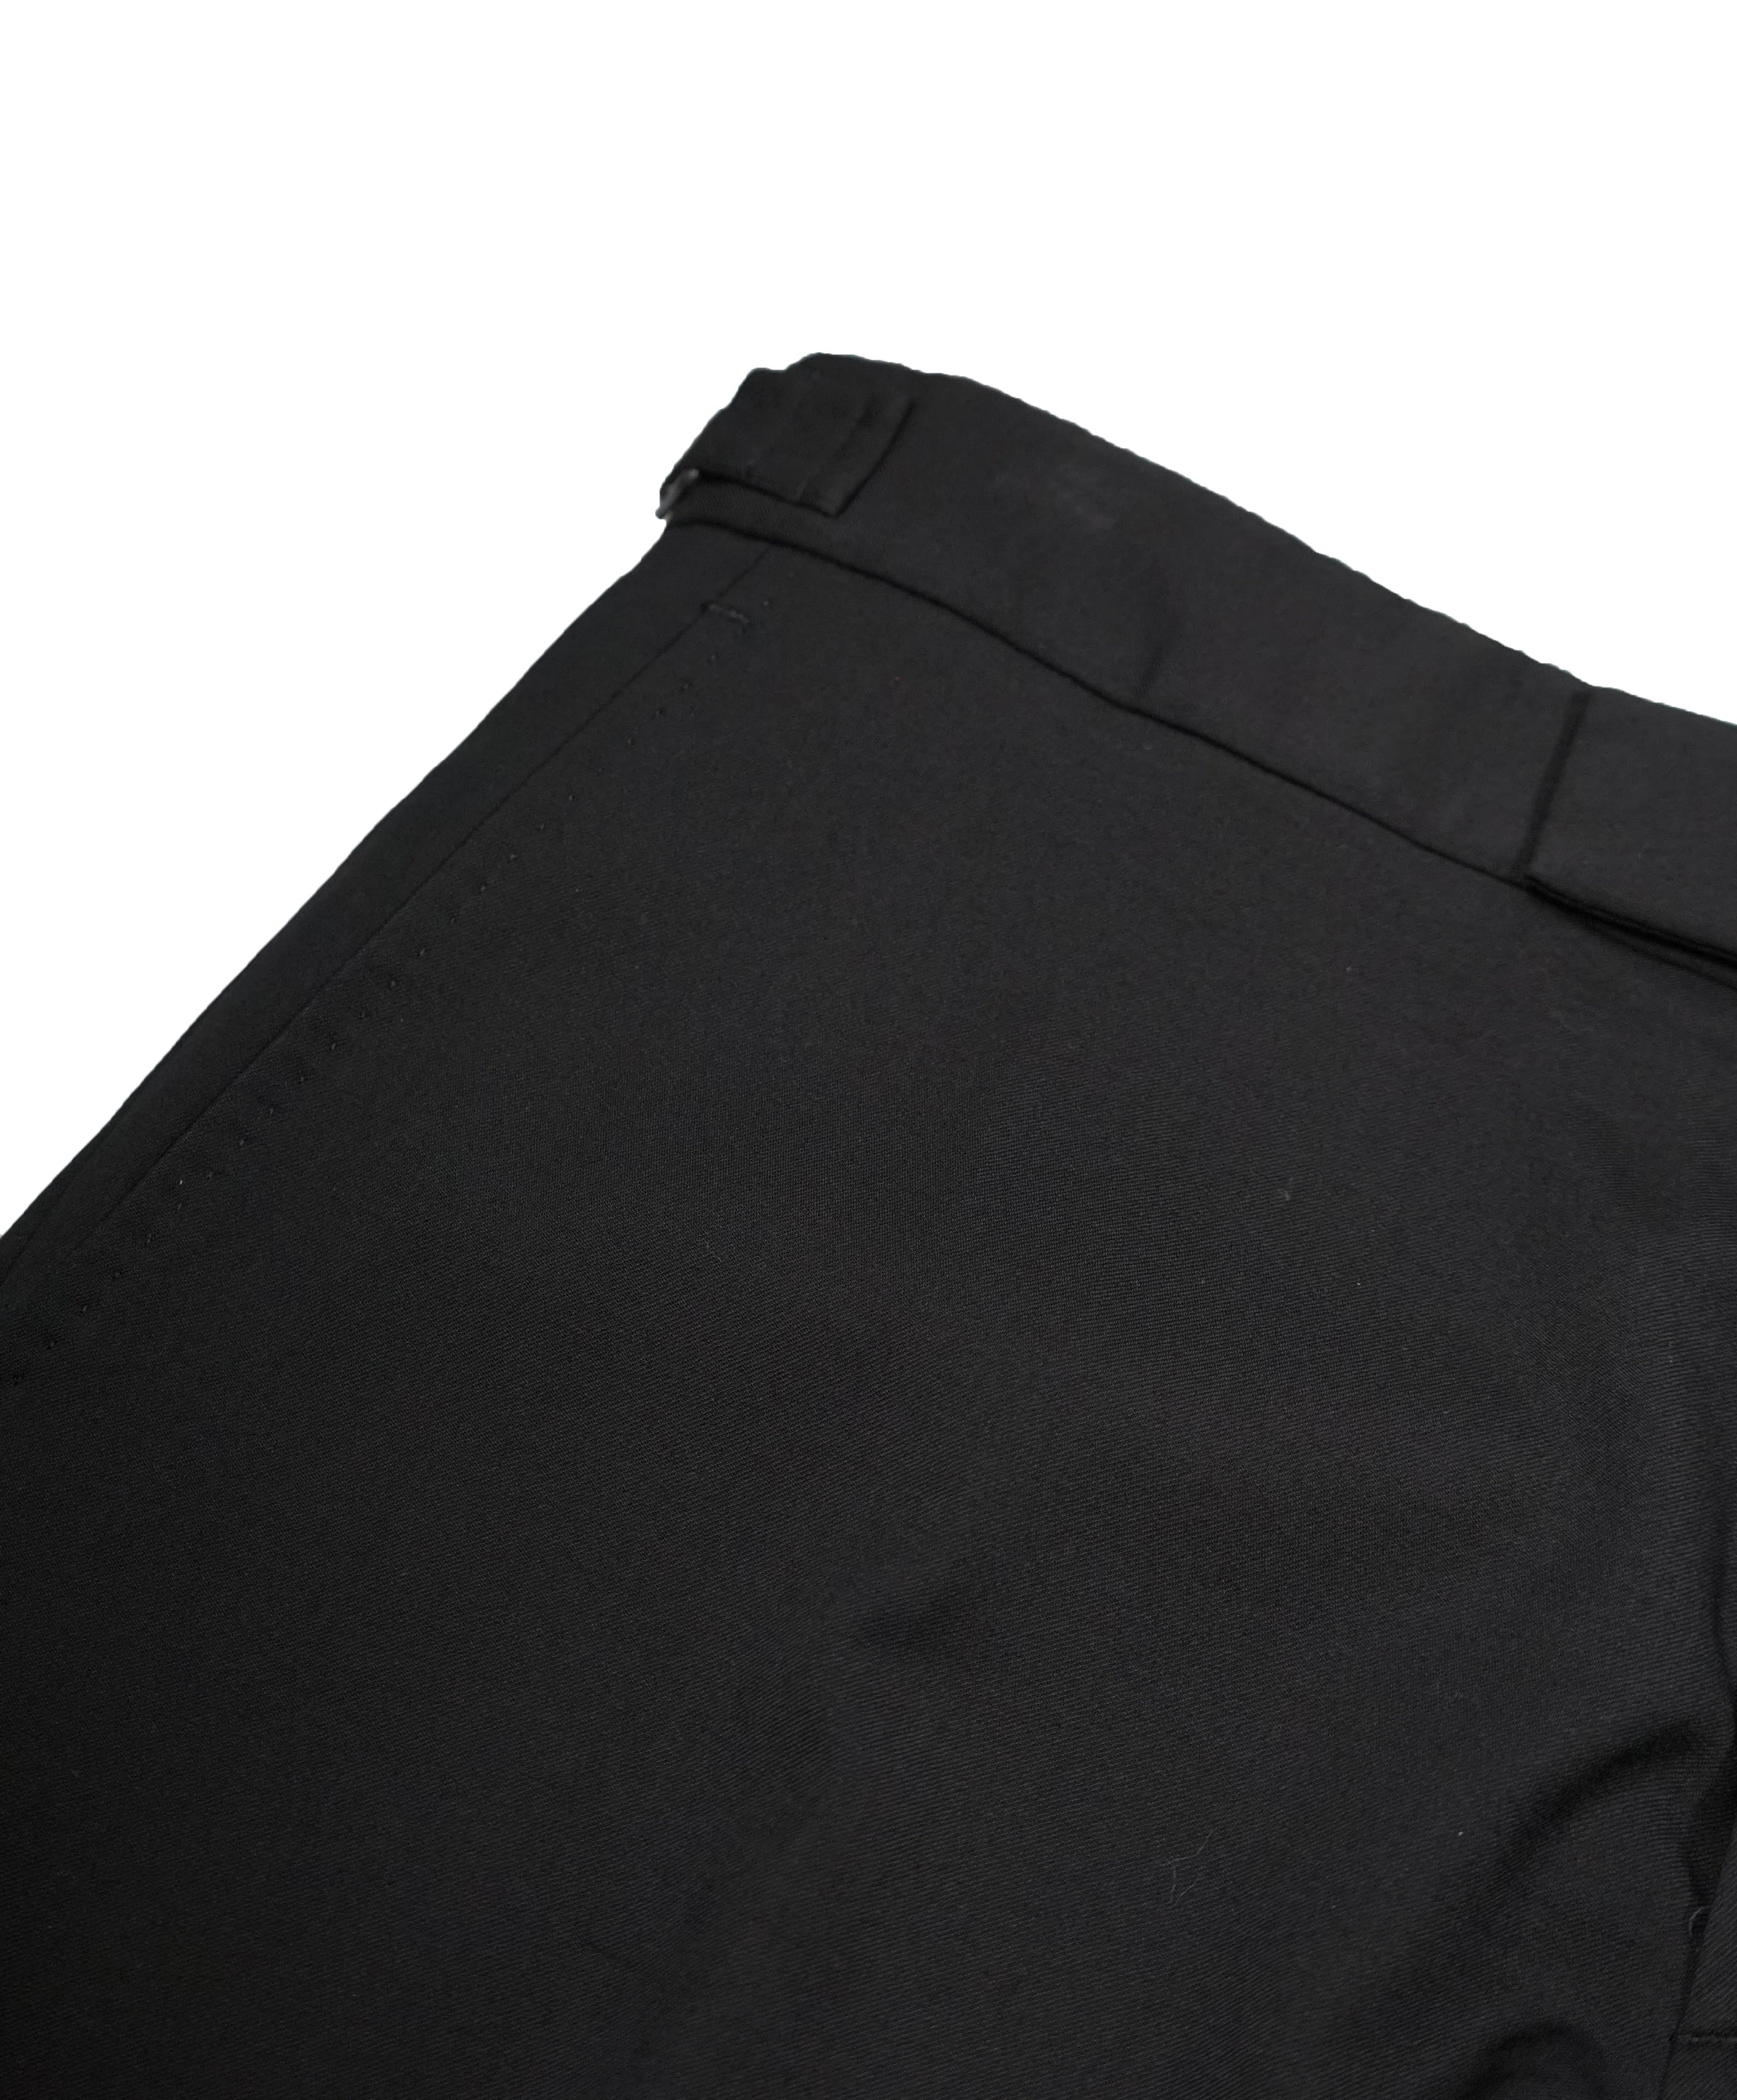 RALPH LAUREN BLACK LABEL - Solid Black Dress Pants With Side Tabs 